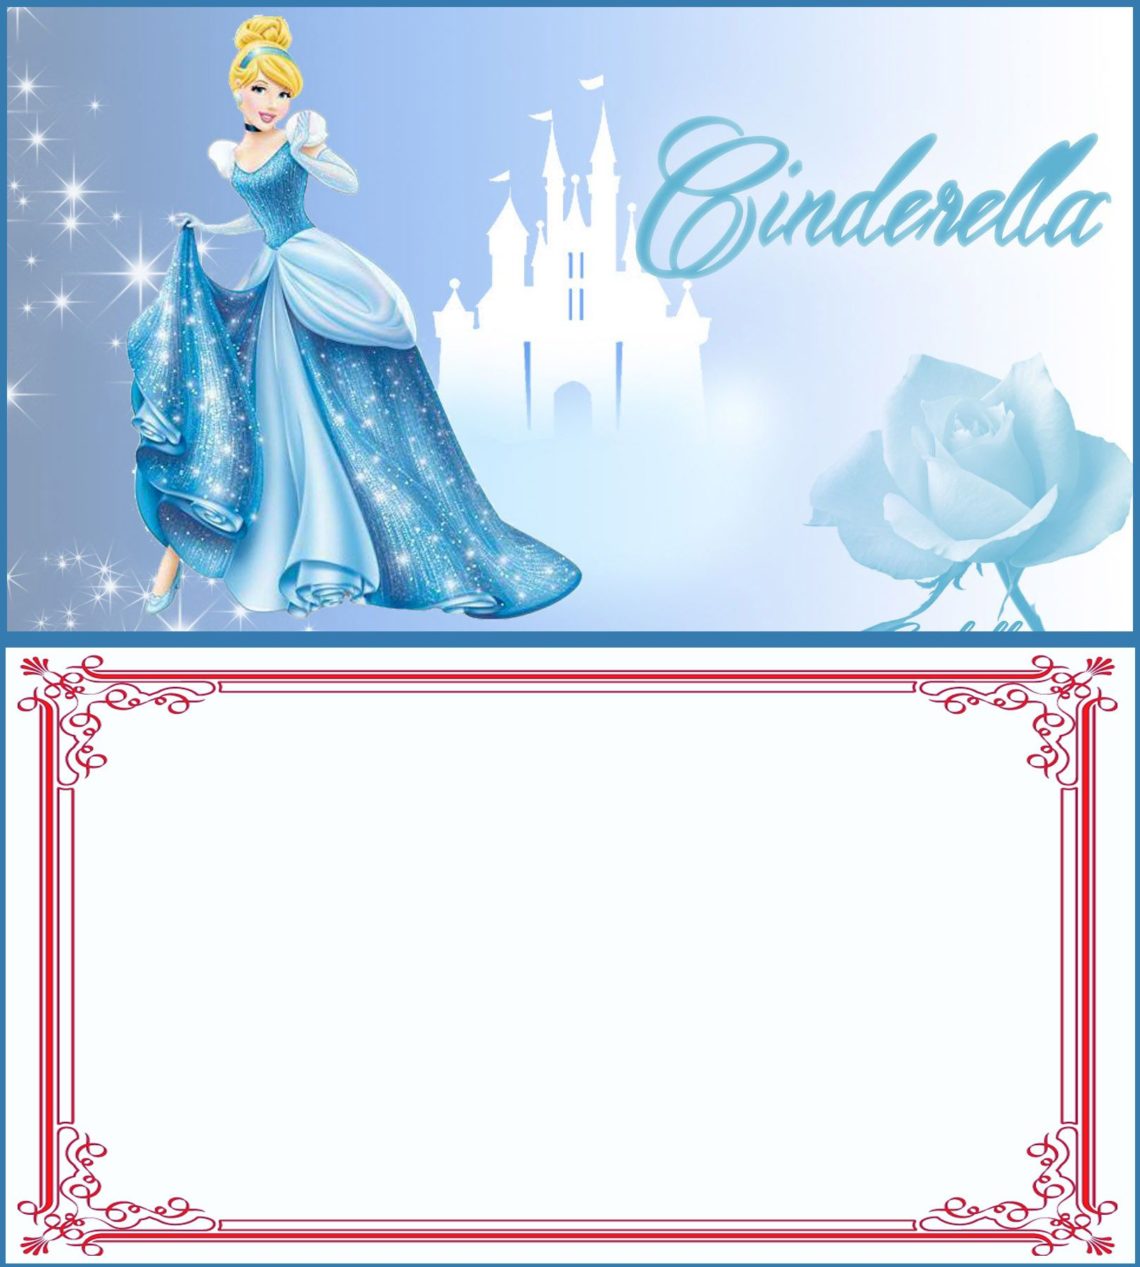 Cinderella Party Invitation Card Free Invitation Templates